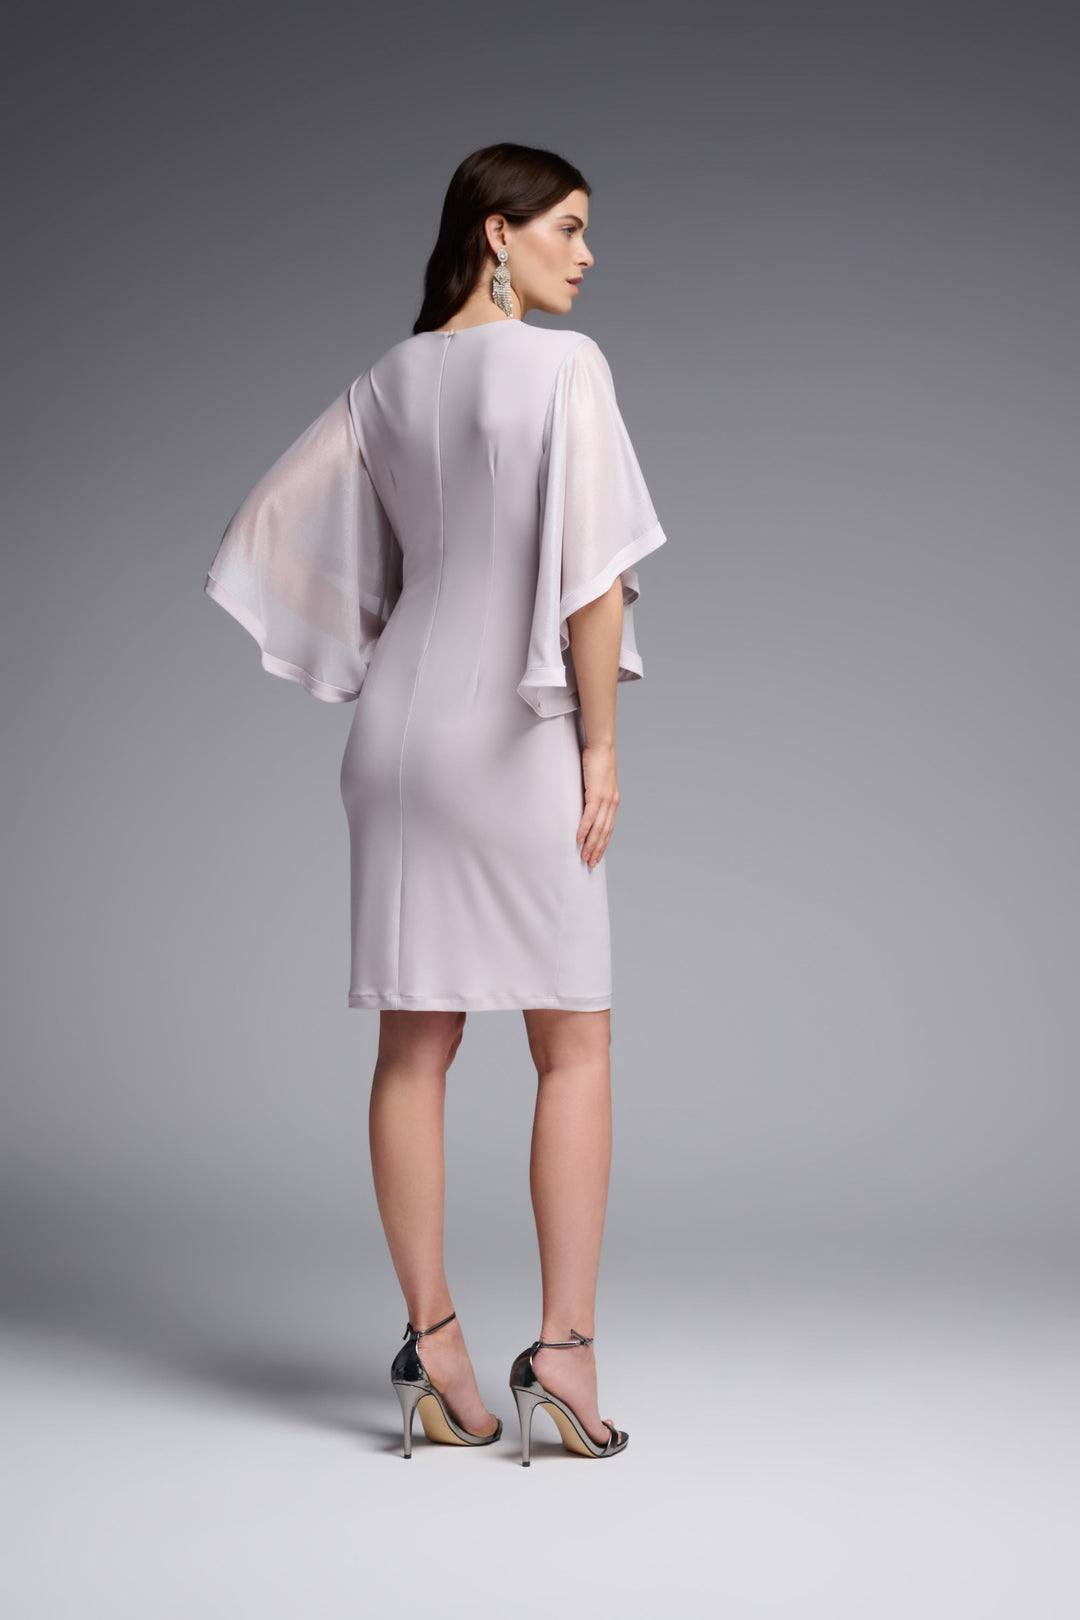 Joseph Ribkoff Dress Style 231747